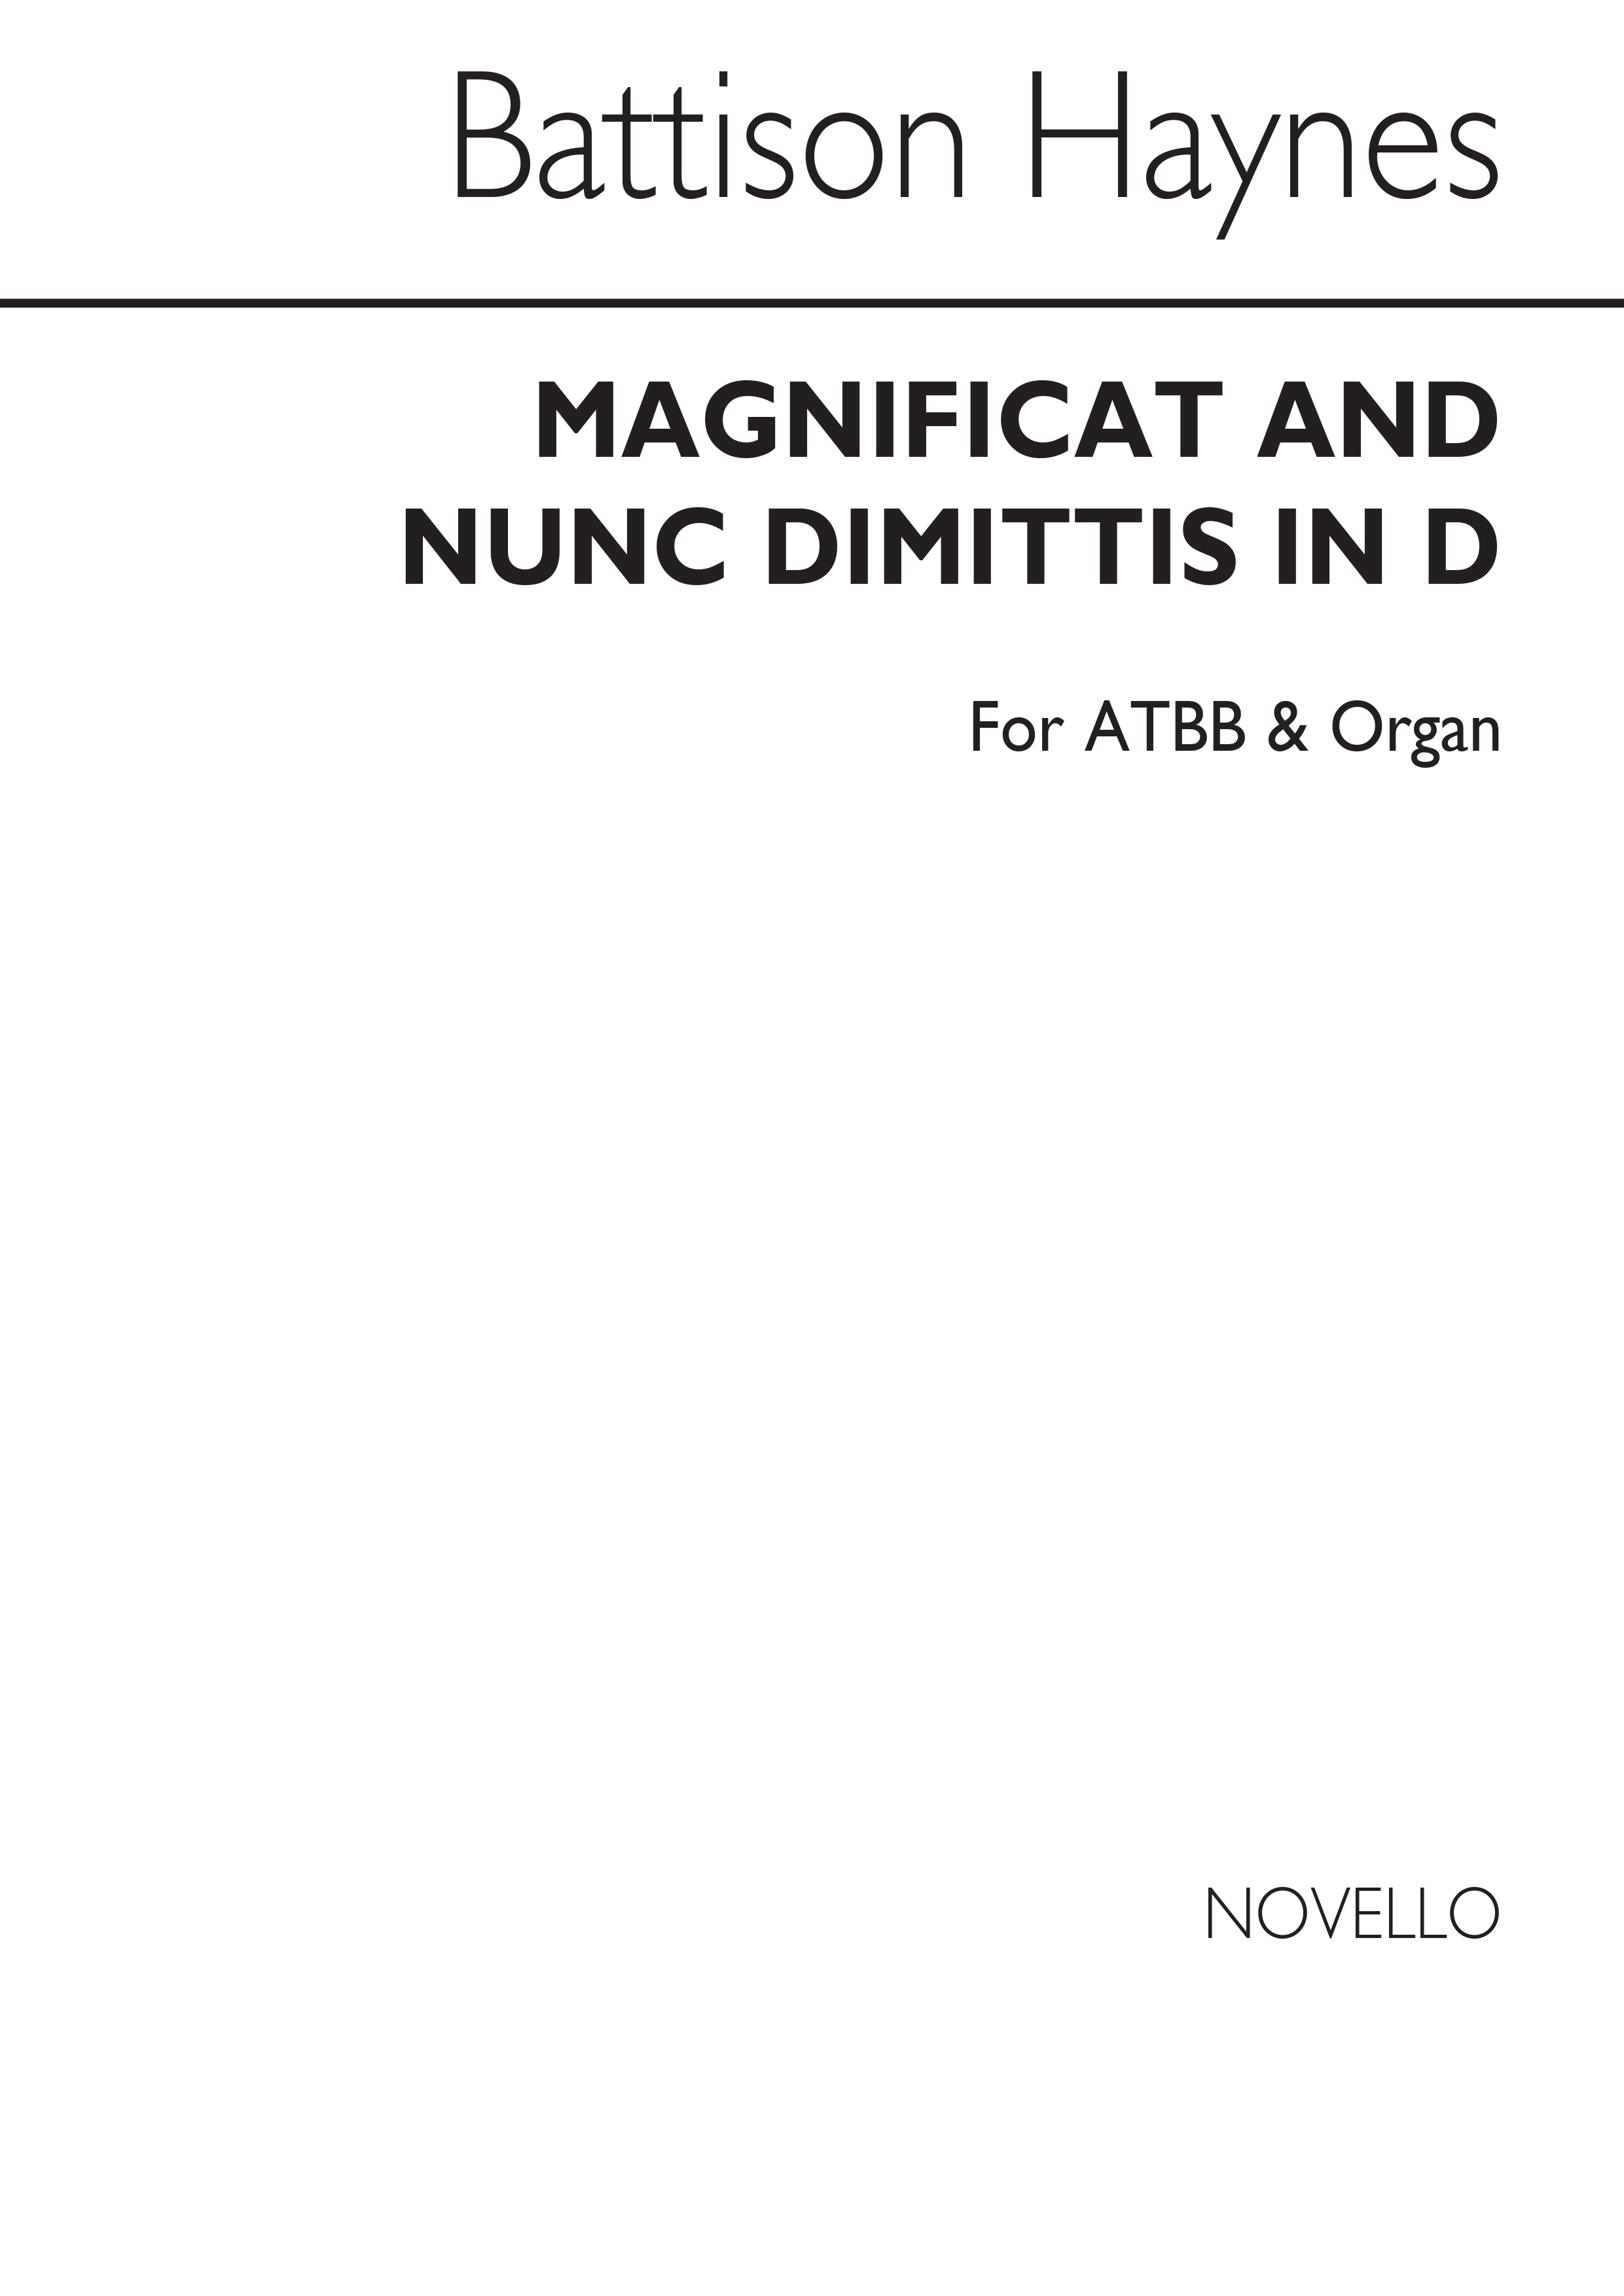 Walter Battison Haynes: Magnificat And Nunc Dimittis In D